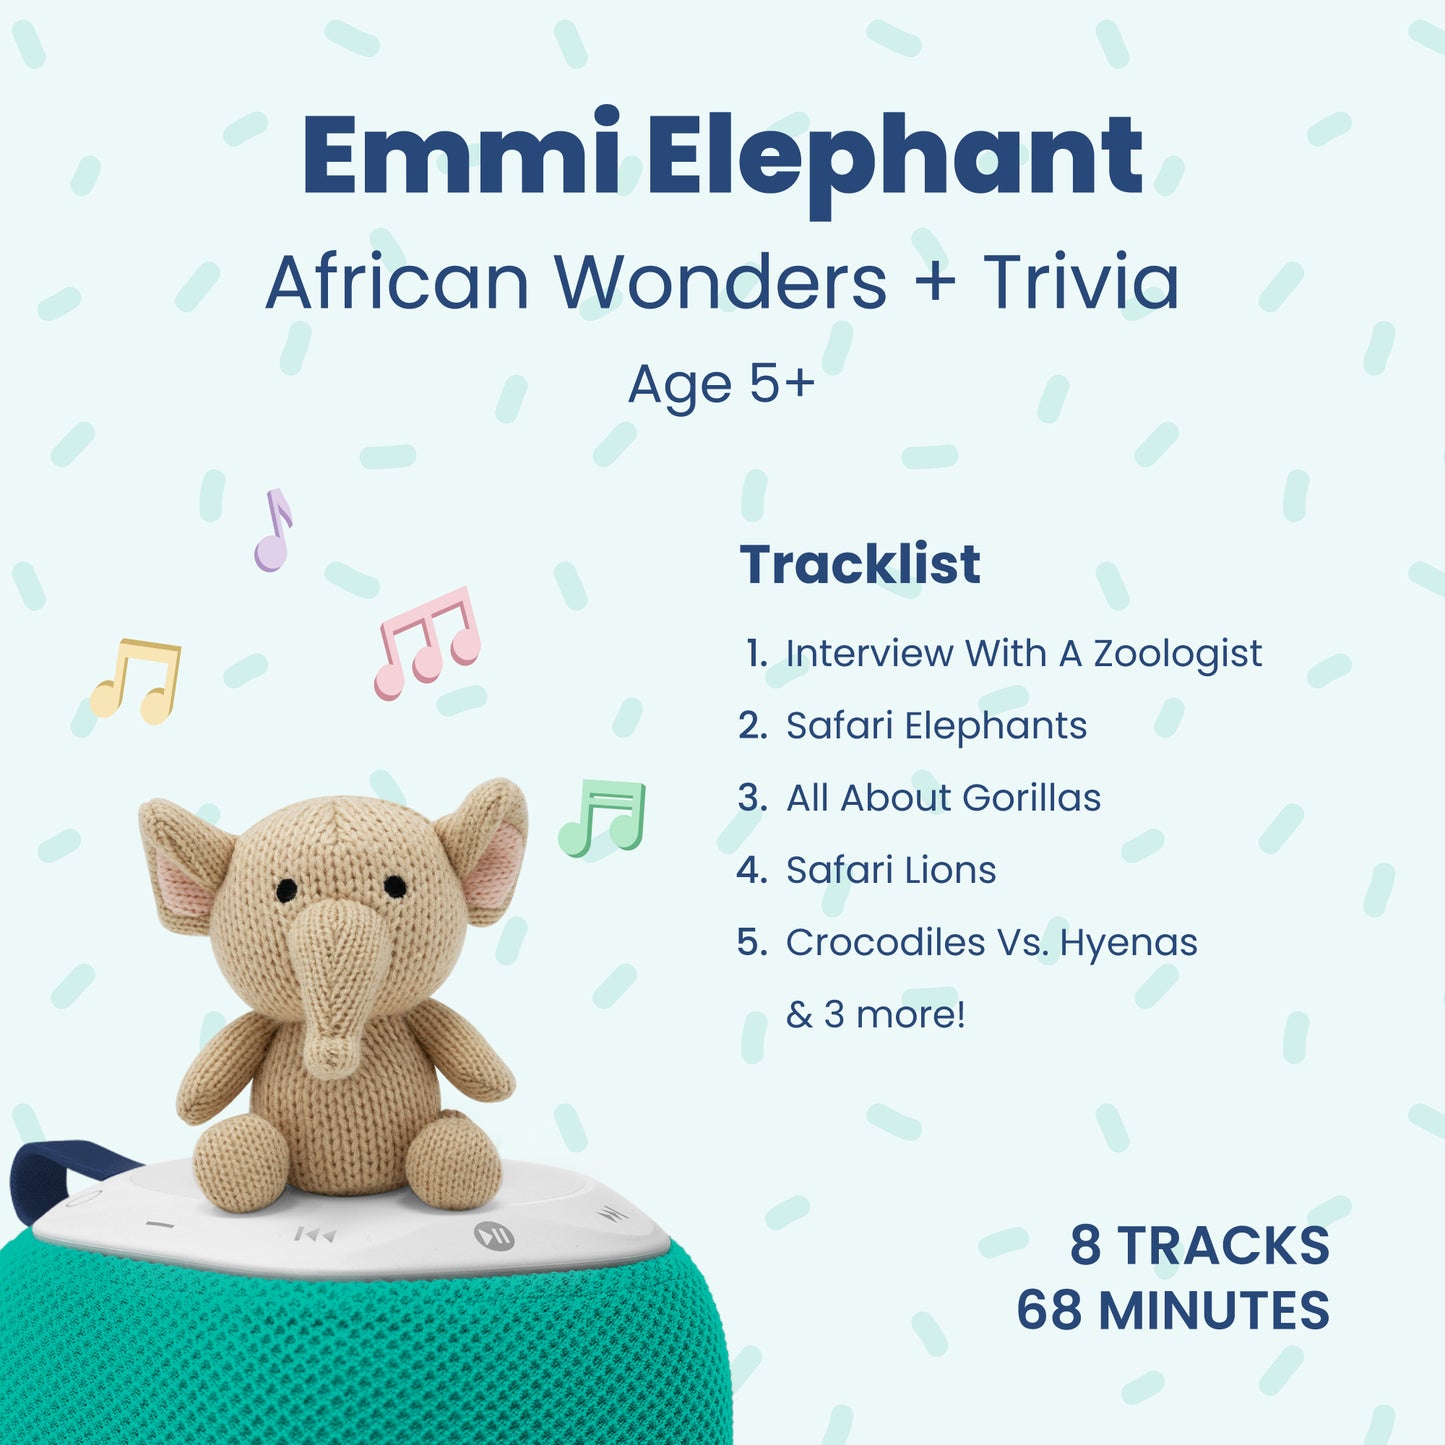 Emmi Elephant